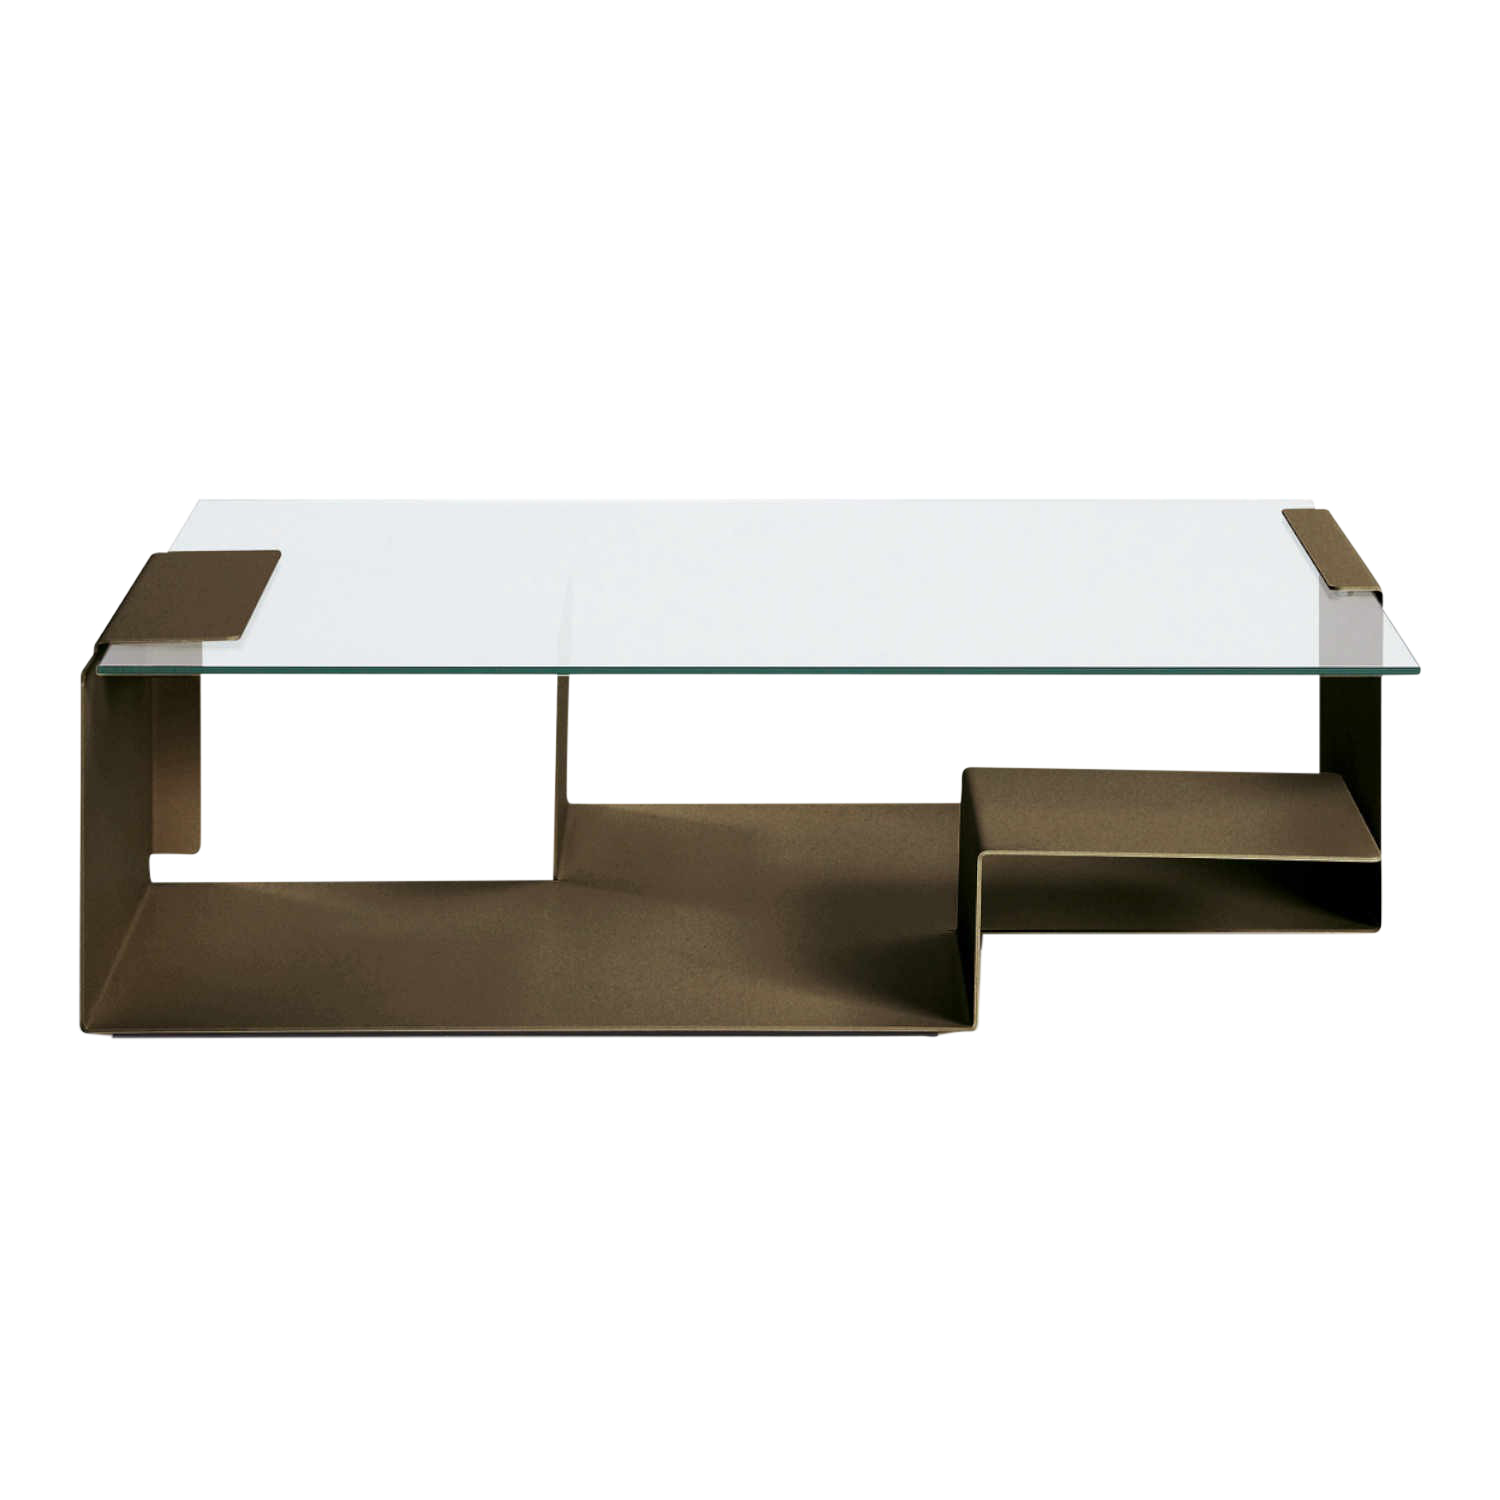 Diana D Side Table Beistelltisch, Farbe cremeweiss ral 9001 von ClassiCon